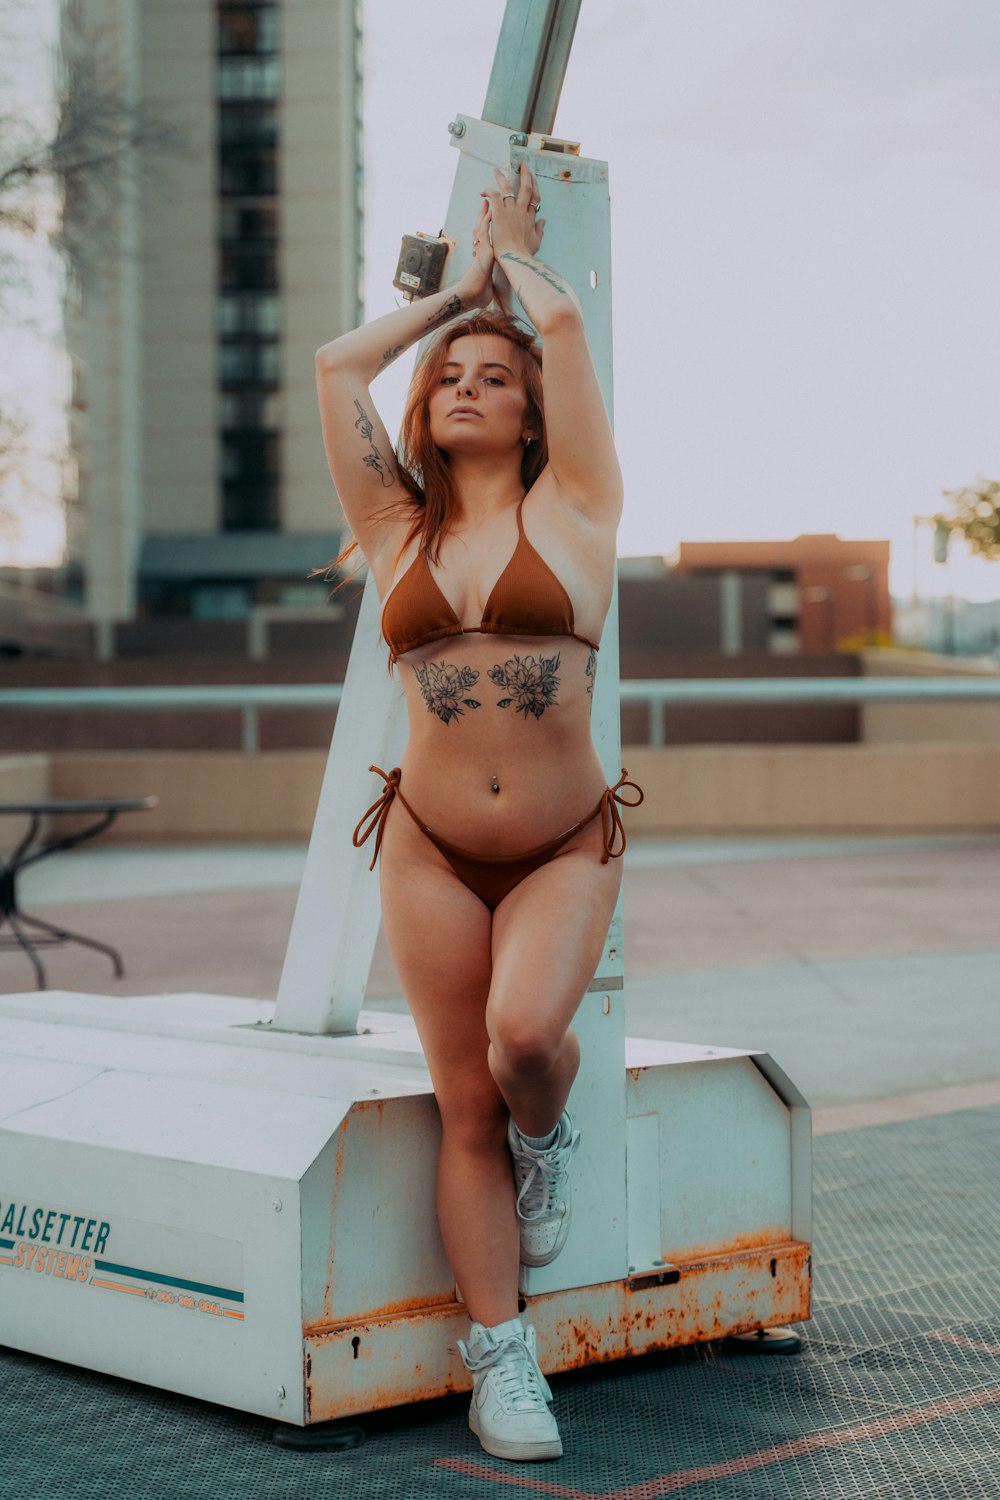 a woman in a bikini standing on a lift